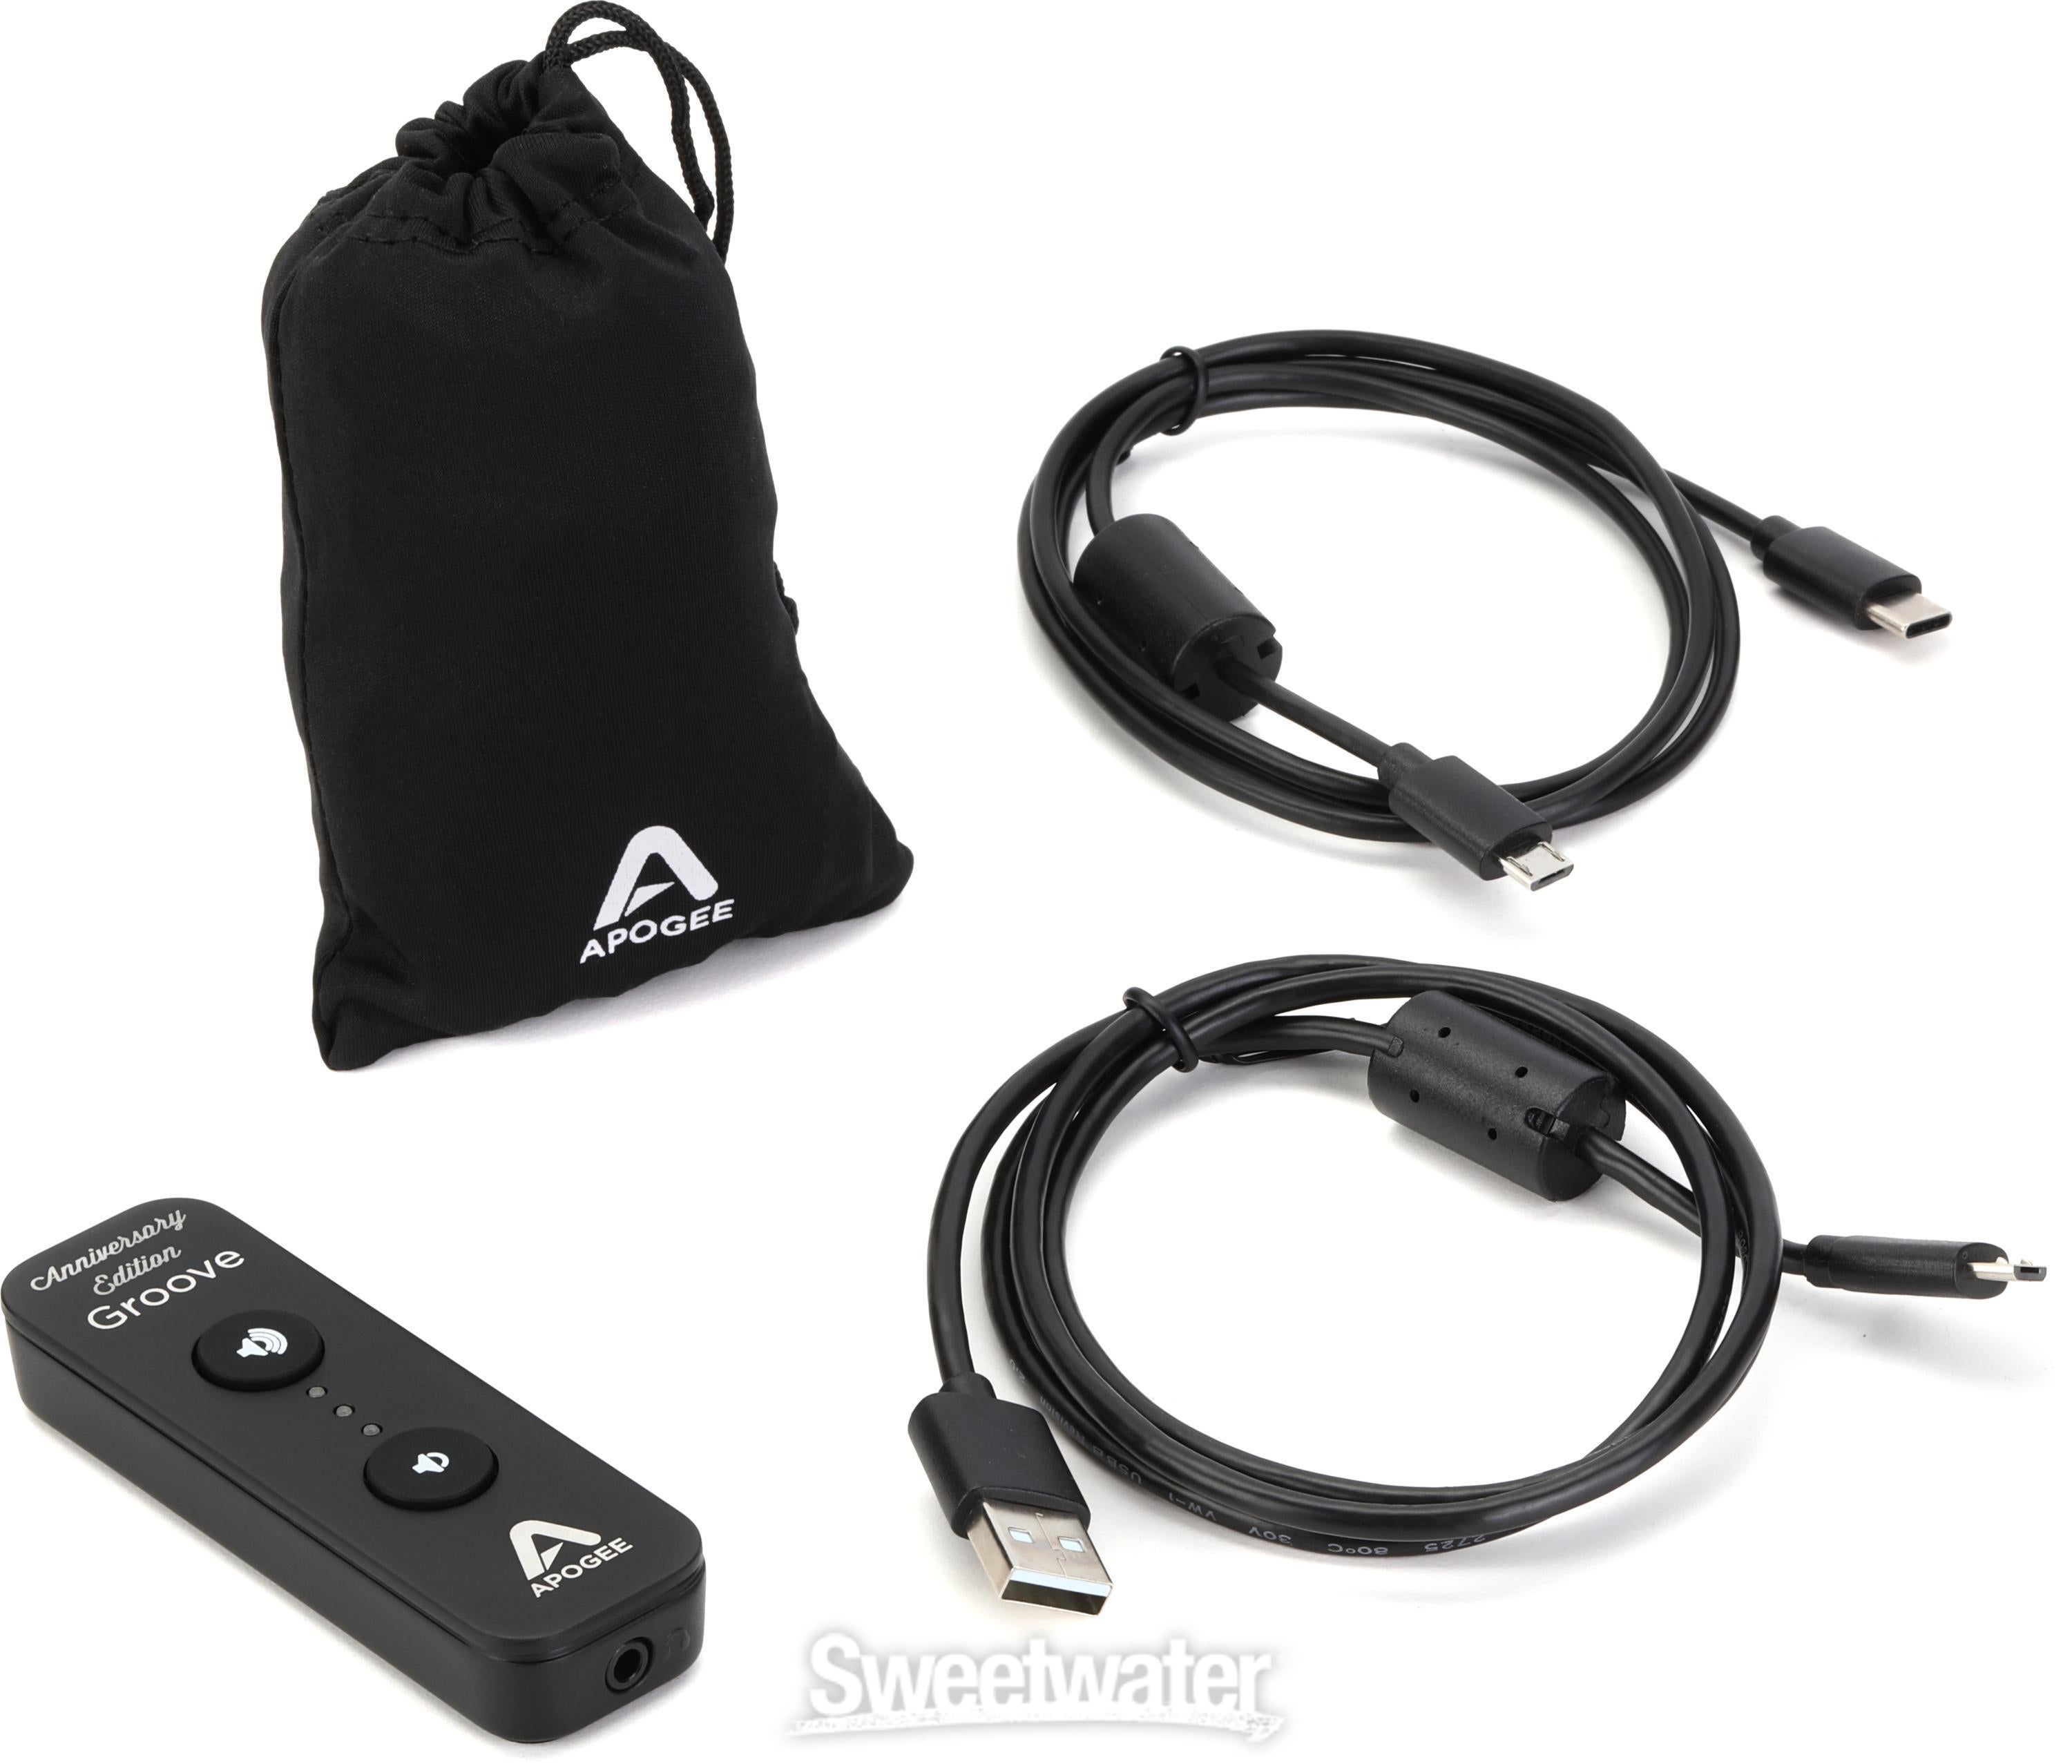 Apogee Groove Anniversary Edition USB DAC and Headphone Amp